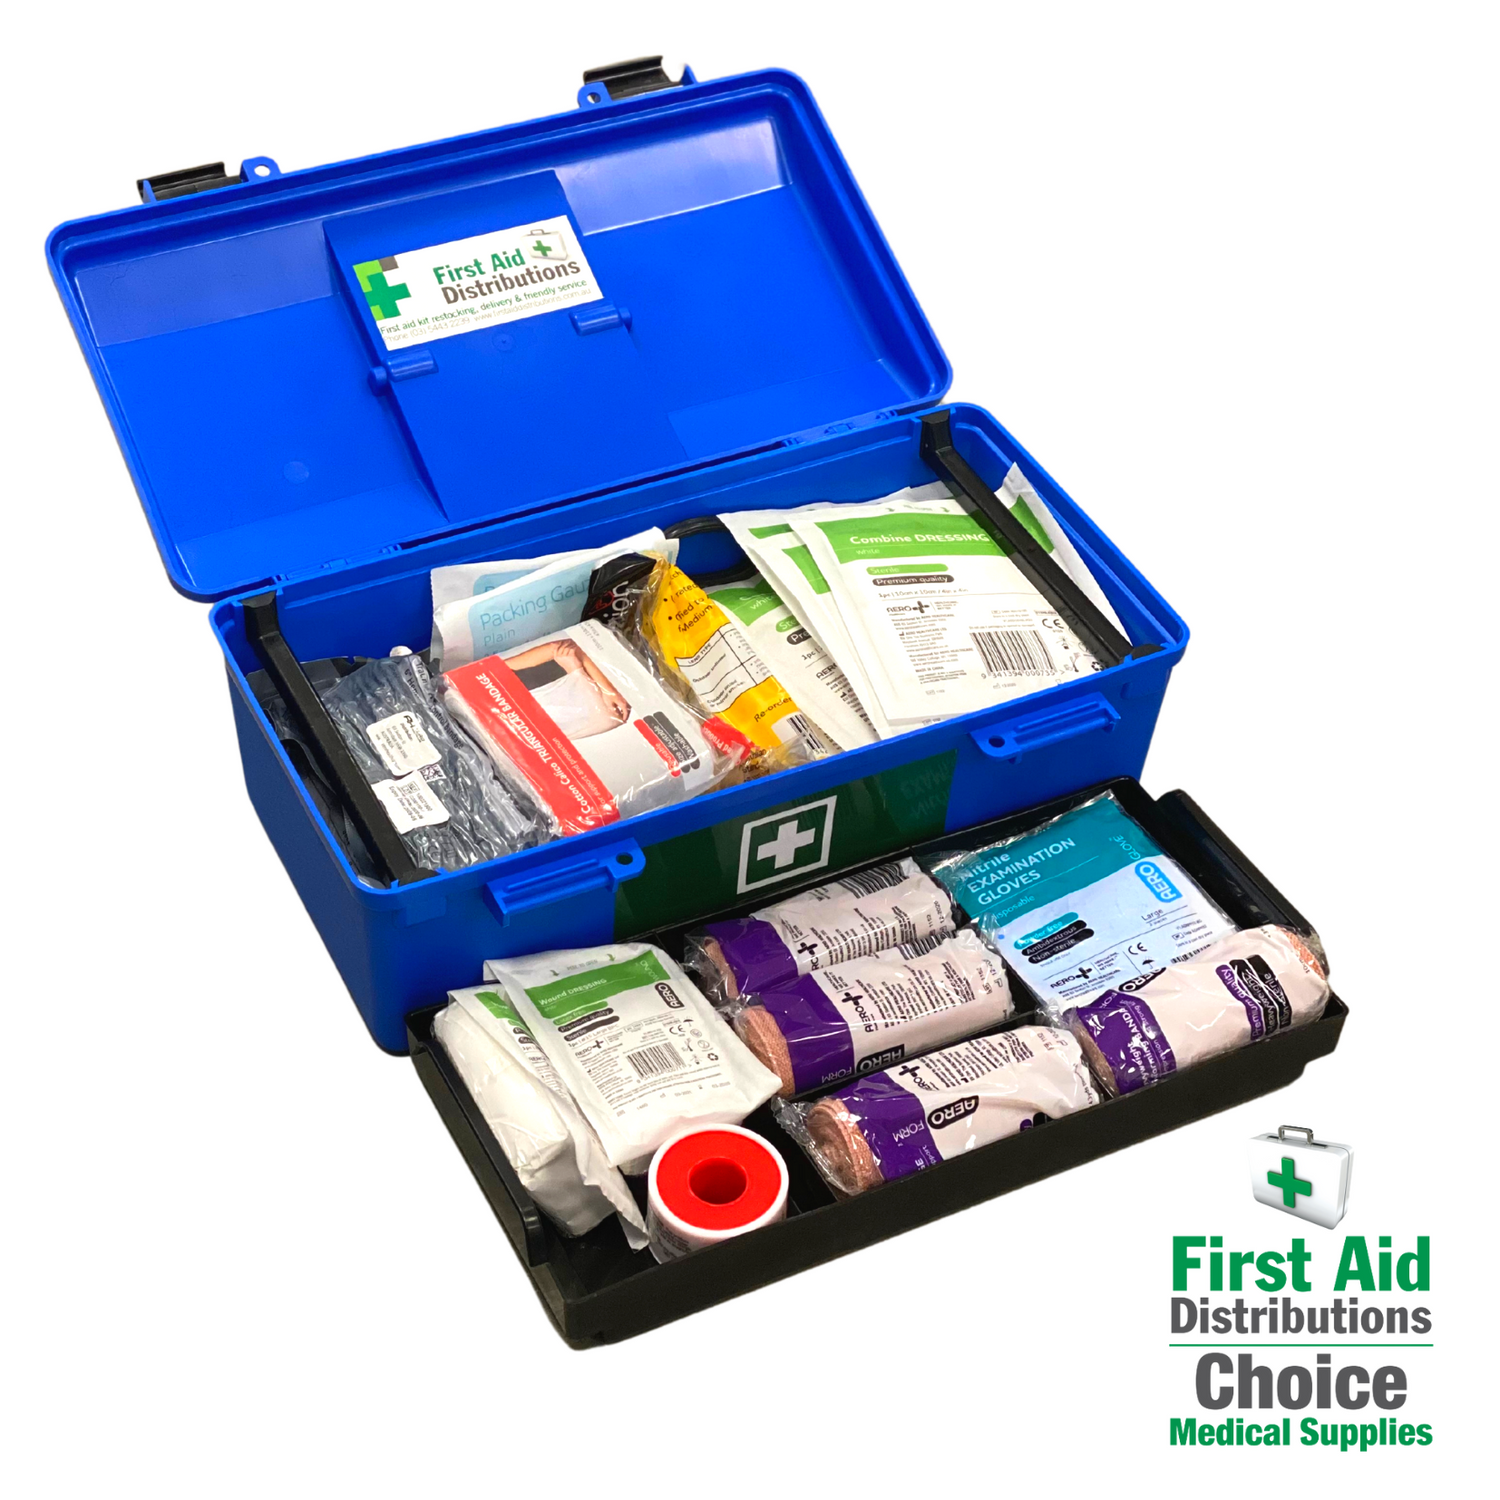 First Aid Kits - Bleeding